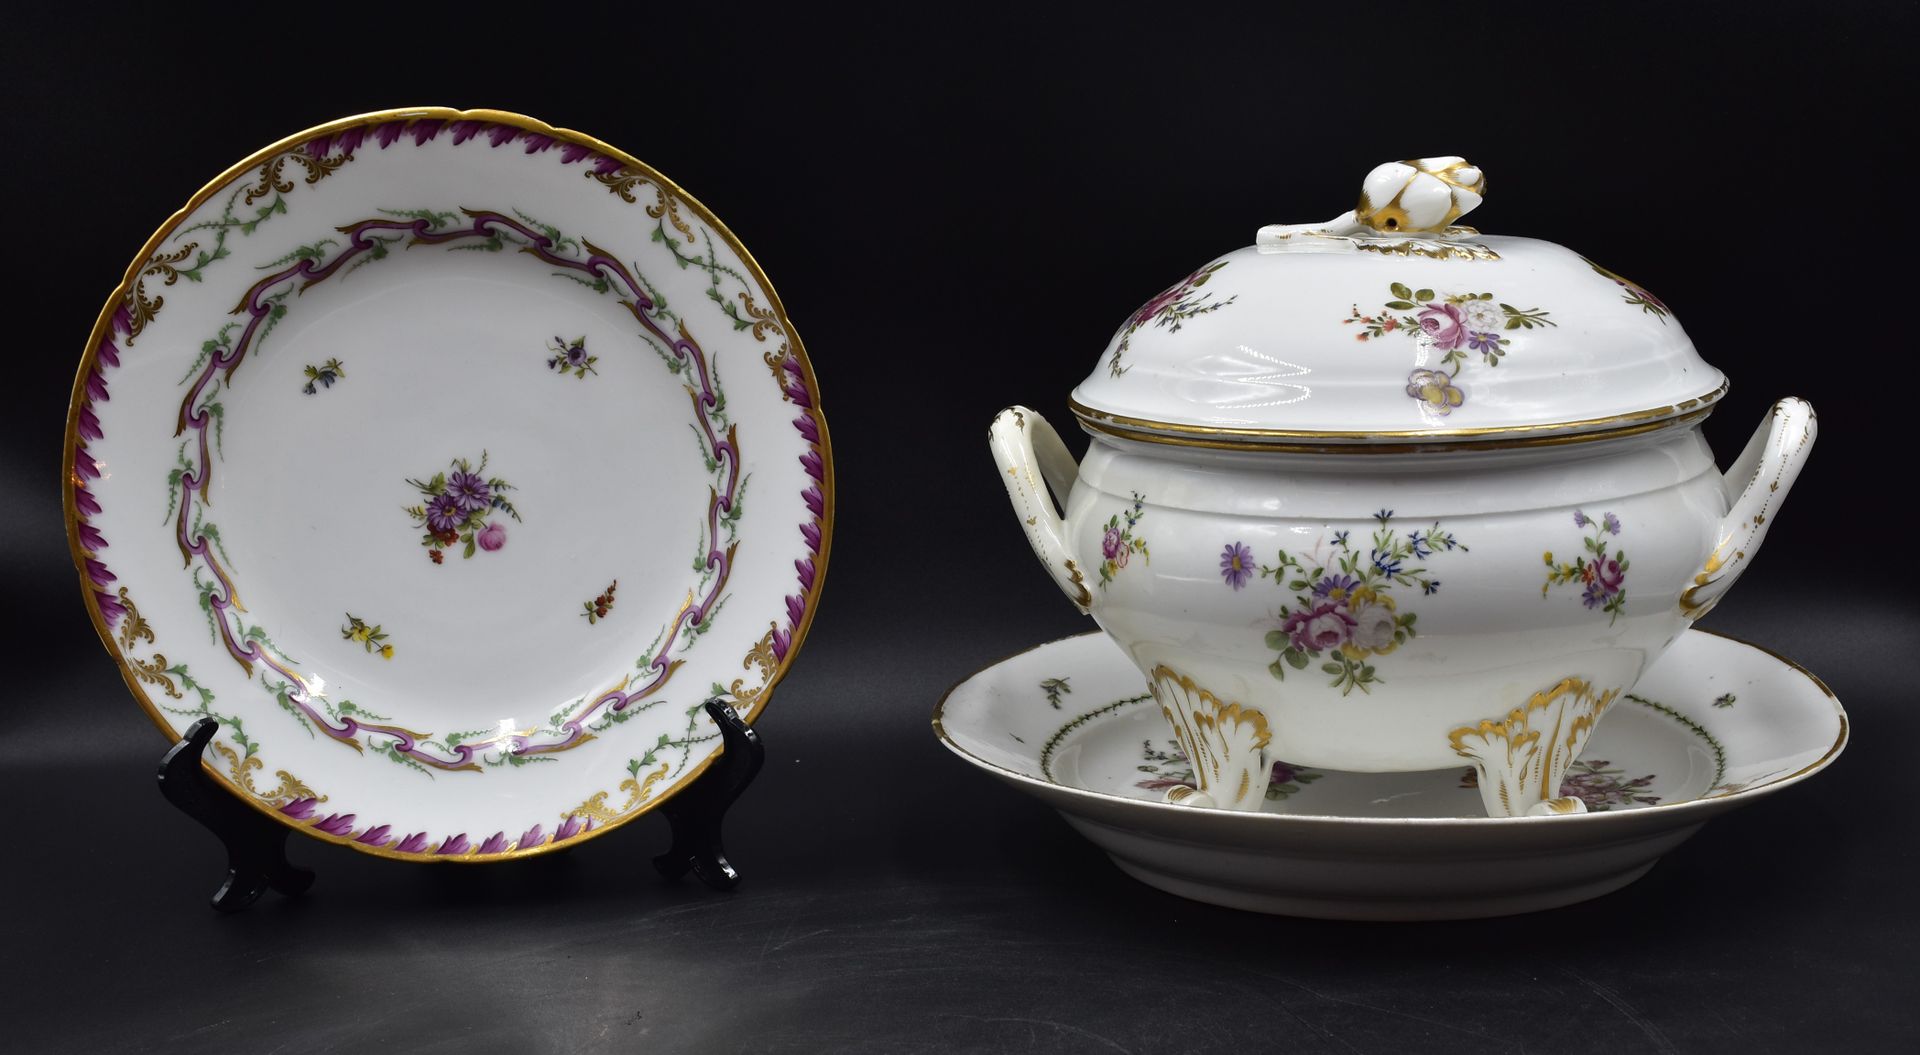 Null Valenciennes瓷器的汤杯和其托盘 18世纪。LAMONARY（恢复到一个手柄，芯片到托盘边缘）。19世纪初，一个带有花卉图案的瓷盘。